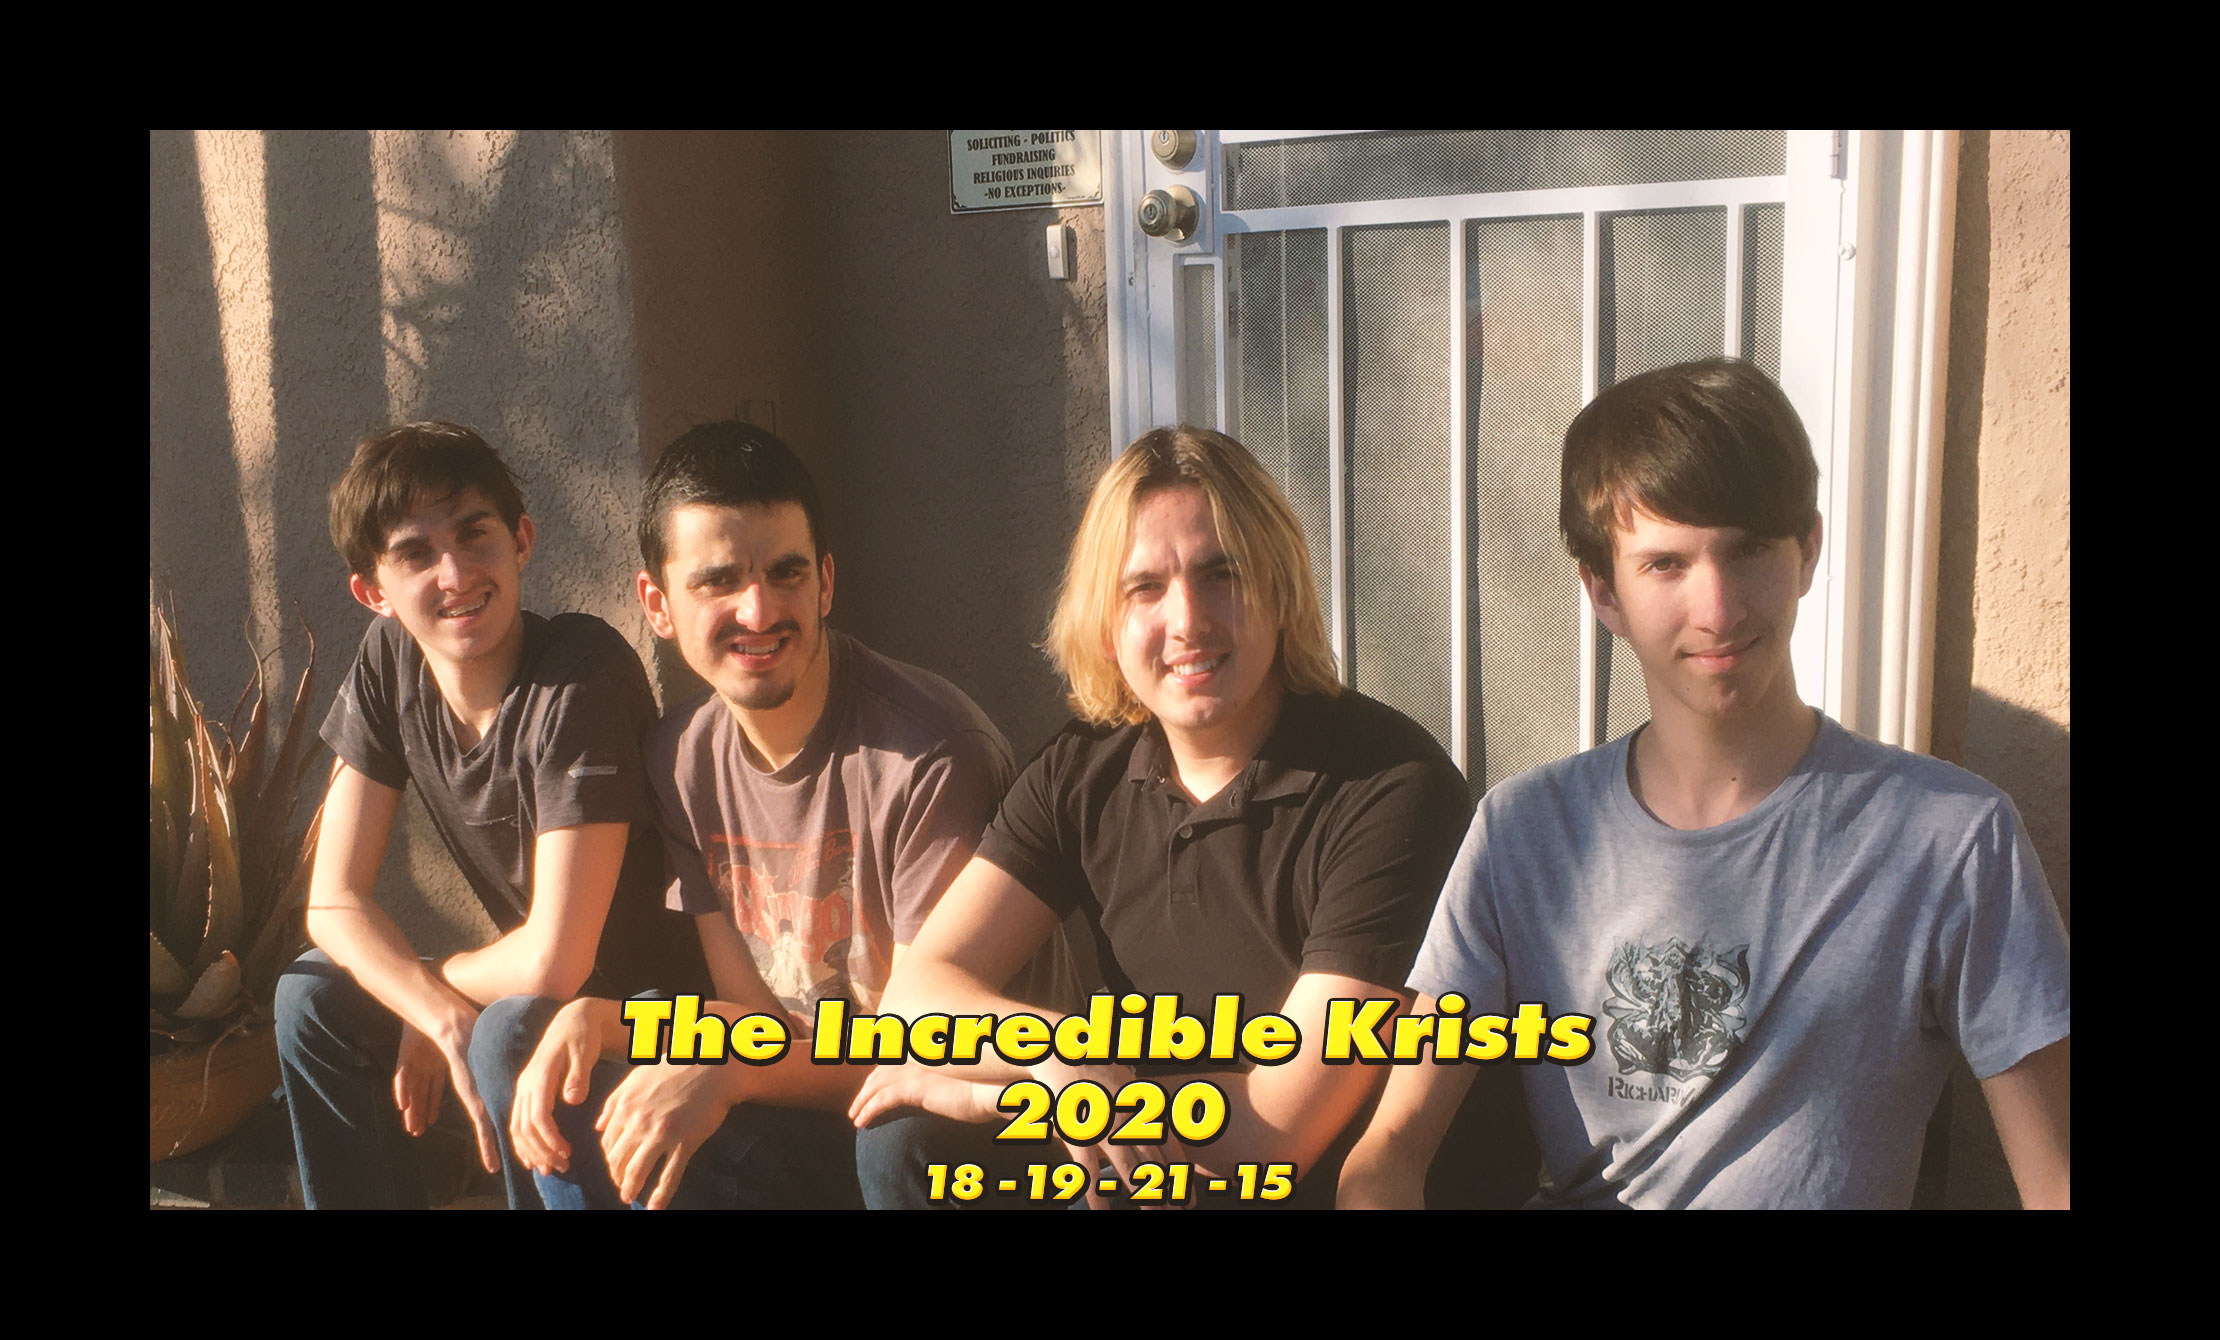 The Unpredictable Krists